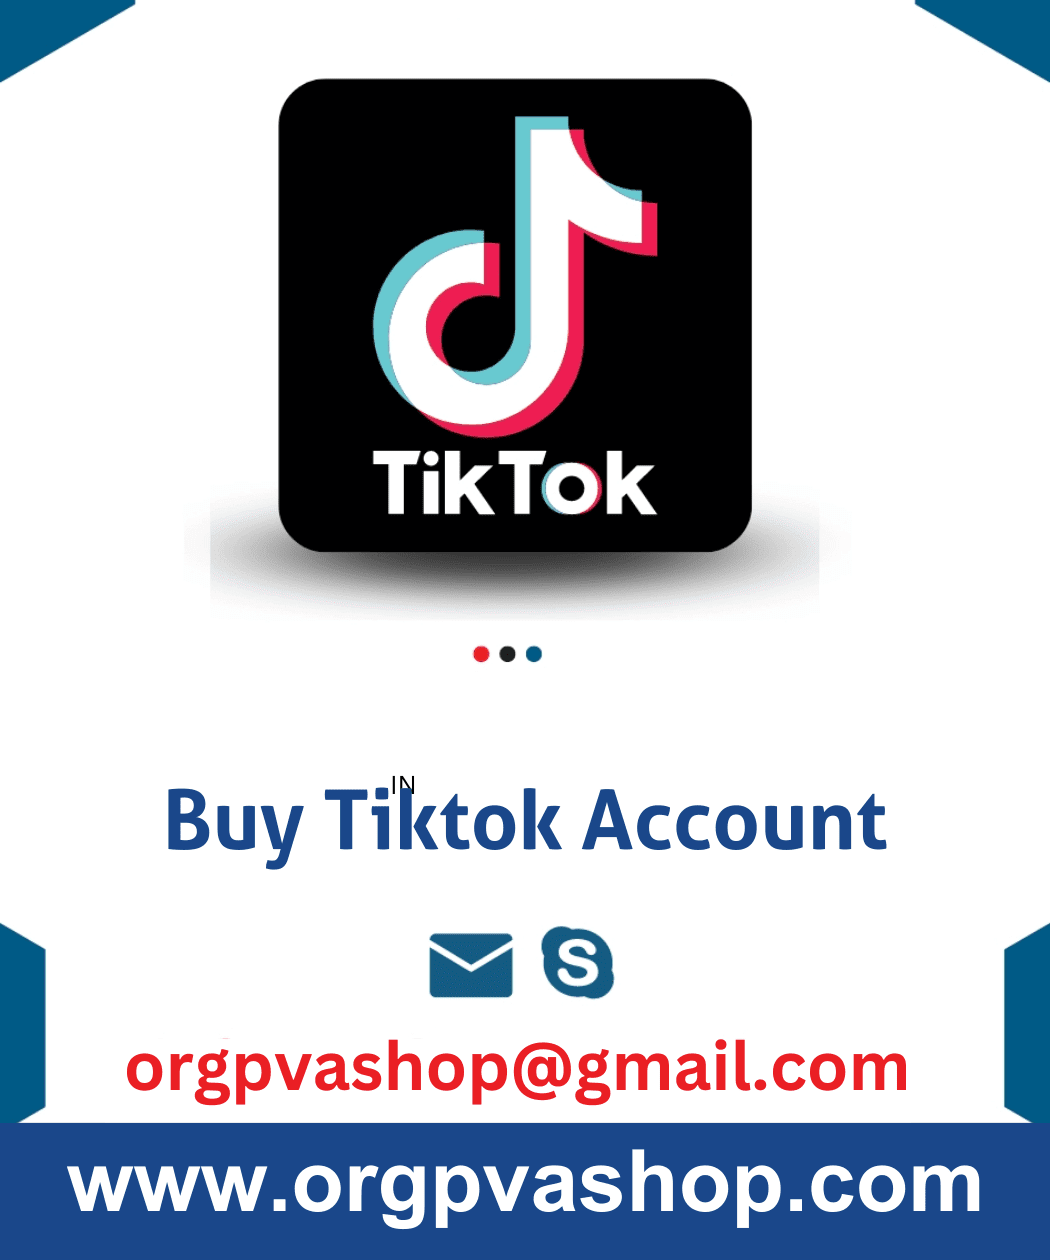 Aged Tiktok Accounts (2 years old)